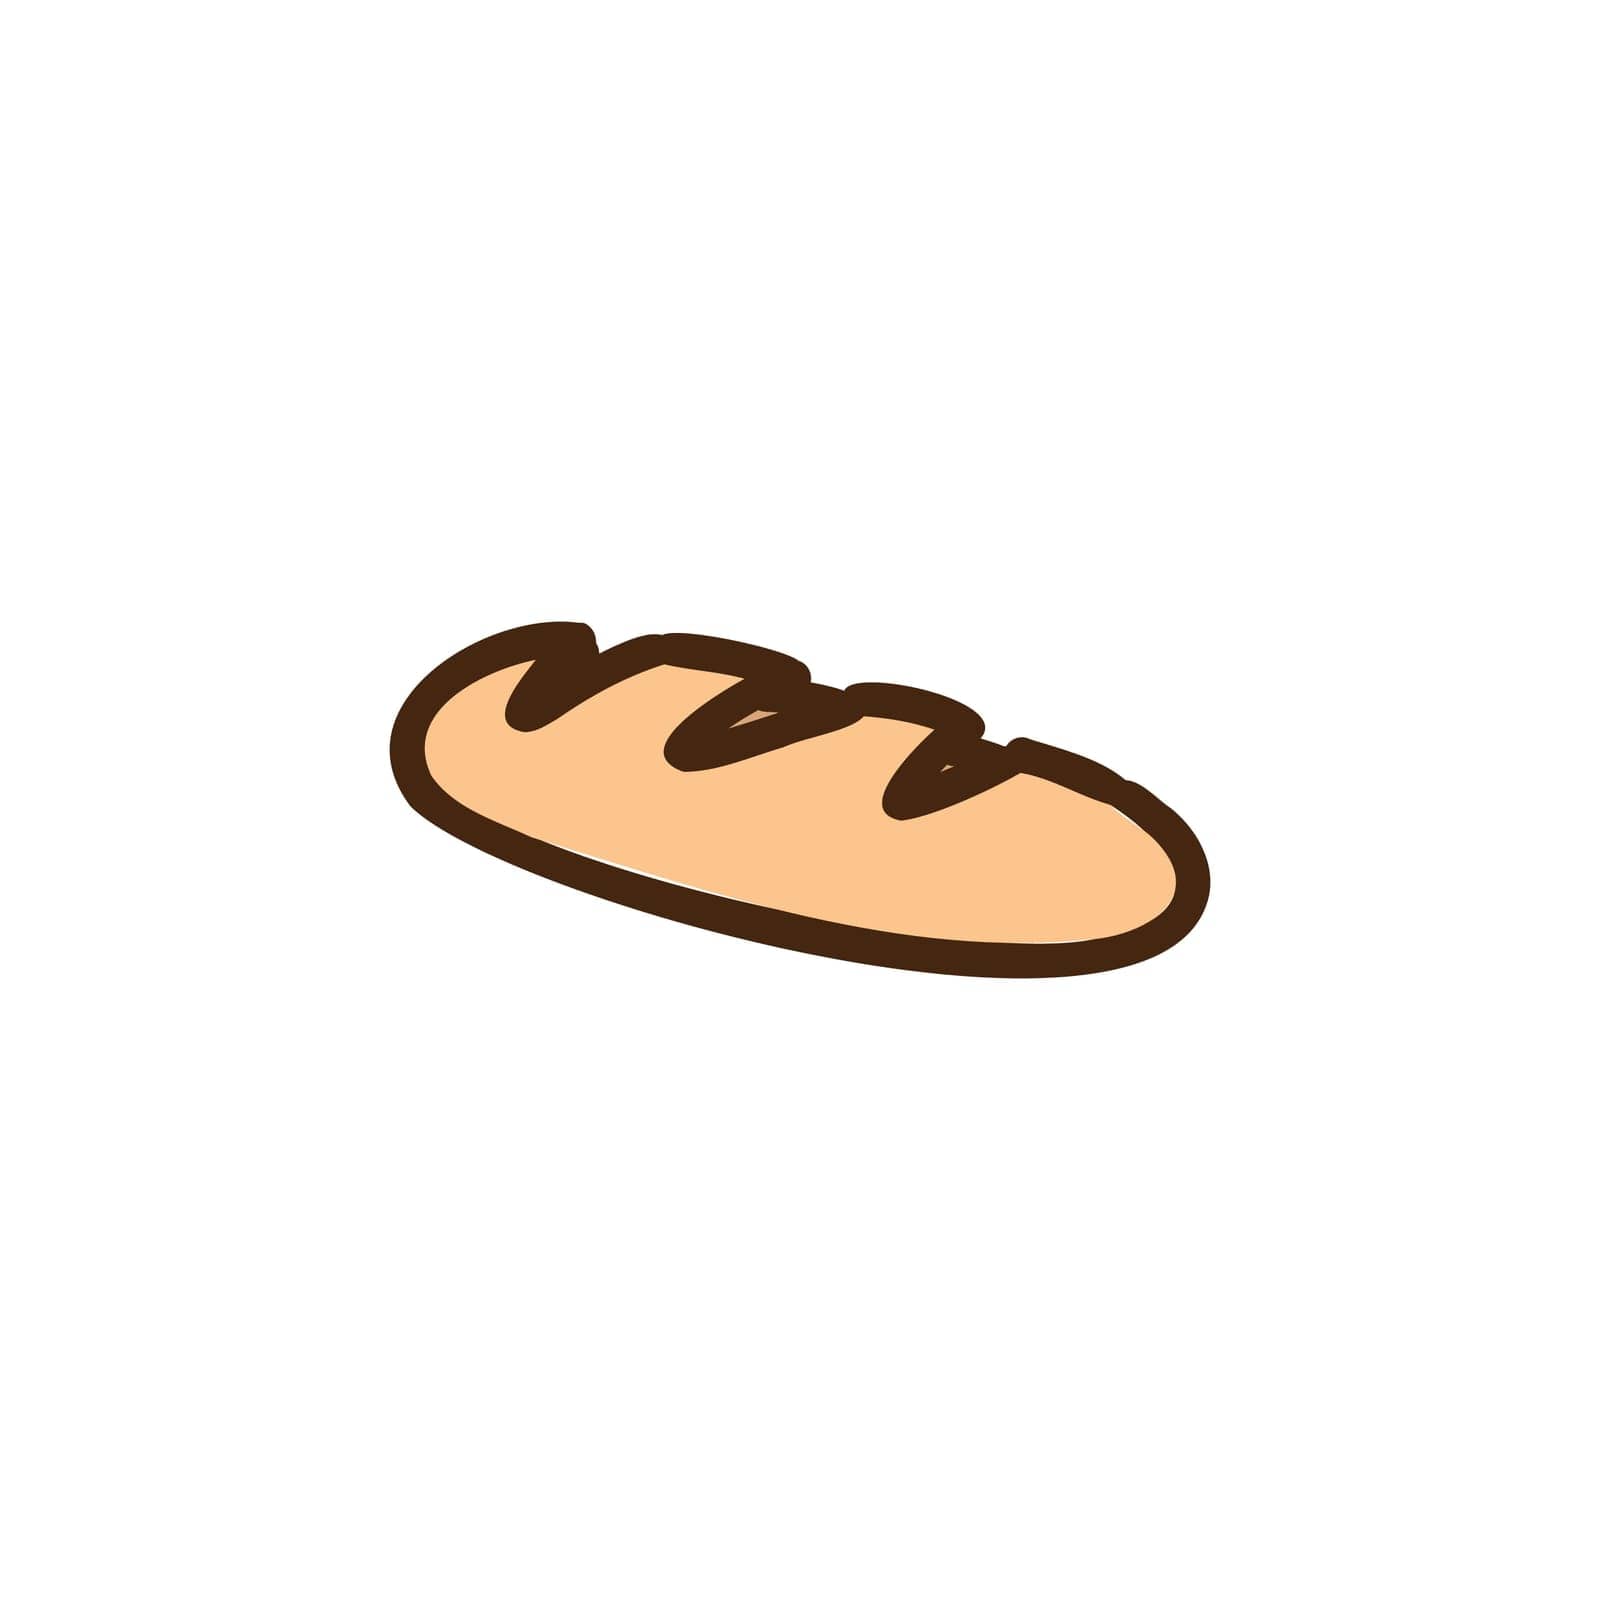 Loaf. Bun hand drawn illustration. Pastry for menu design, cafe decoration. Vector cartoon illustration. by Elena_Garder